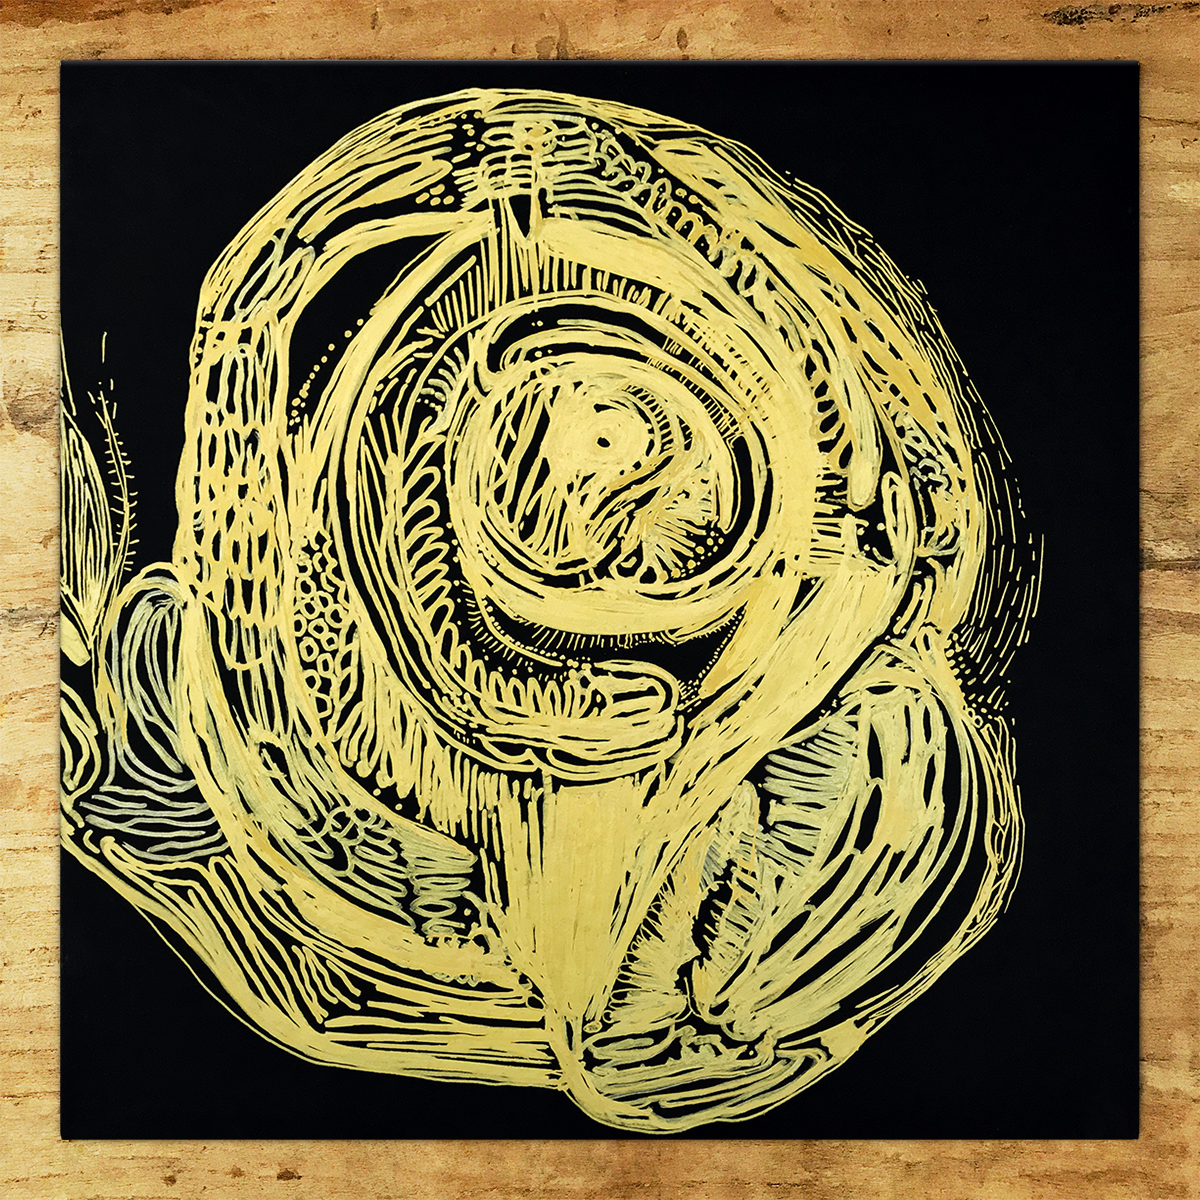 goma gringa disco vinil vinyl record lp onça combo 2017 manufatura desenhado a mao hand-drawn